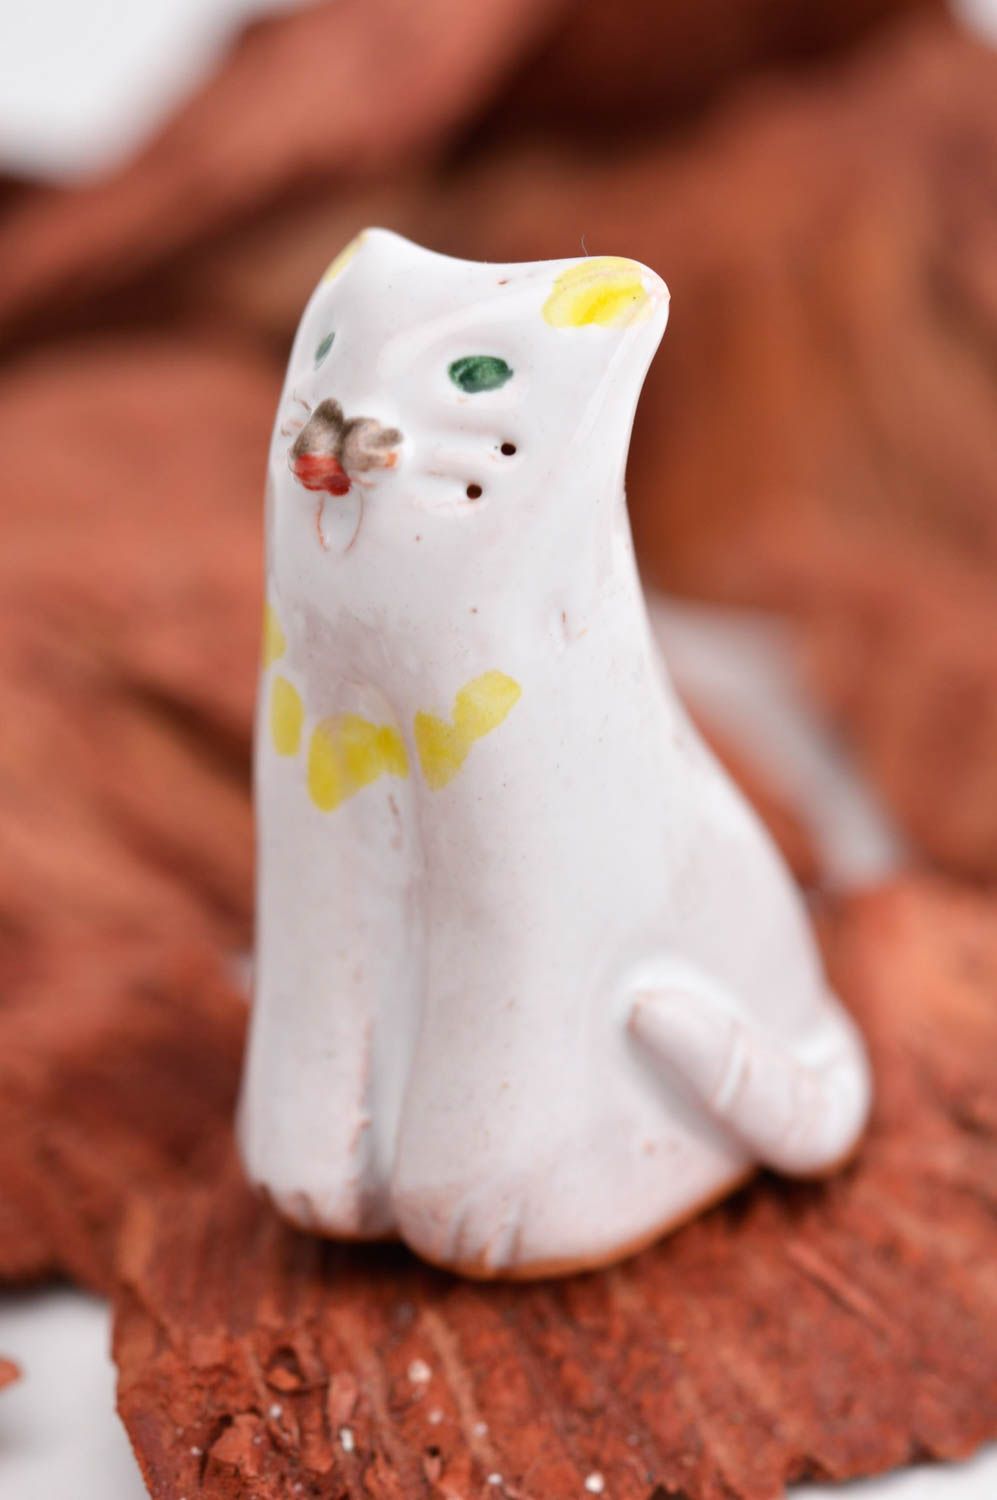 Handmade Keramik Deko Figur aus Ton Tier Statue Miniatur Figur weiße Katze schön foto 7